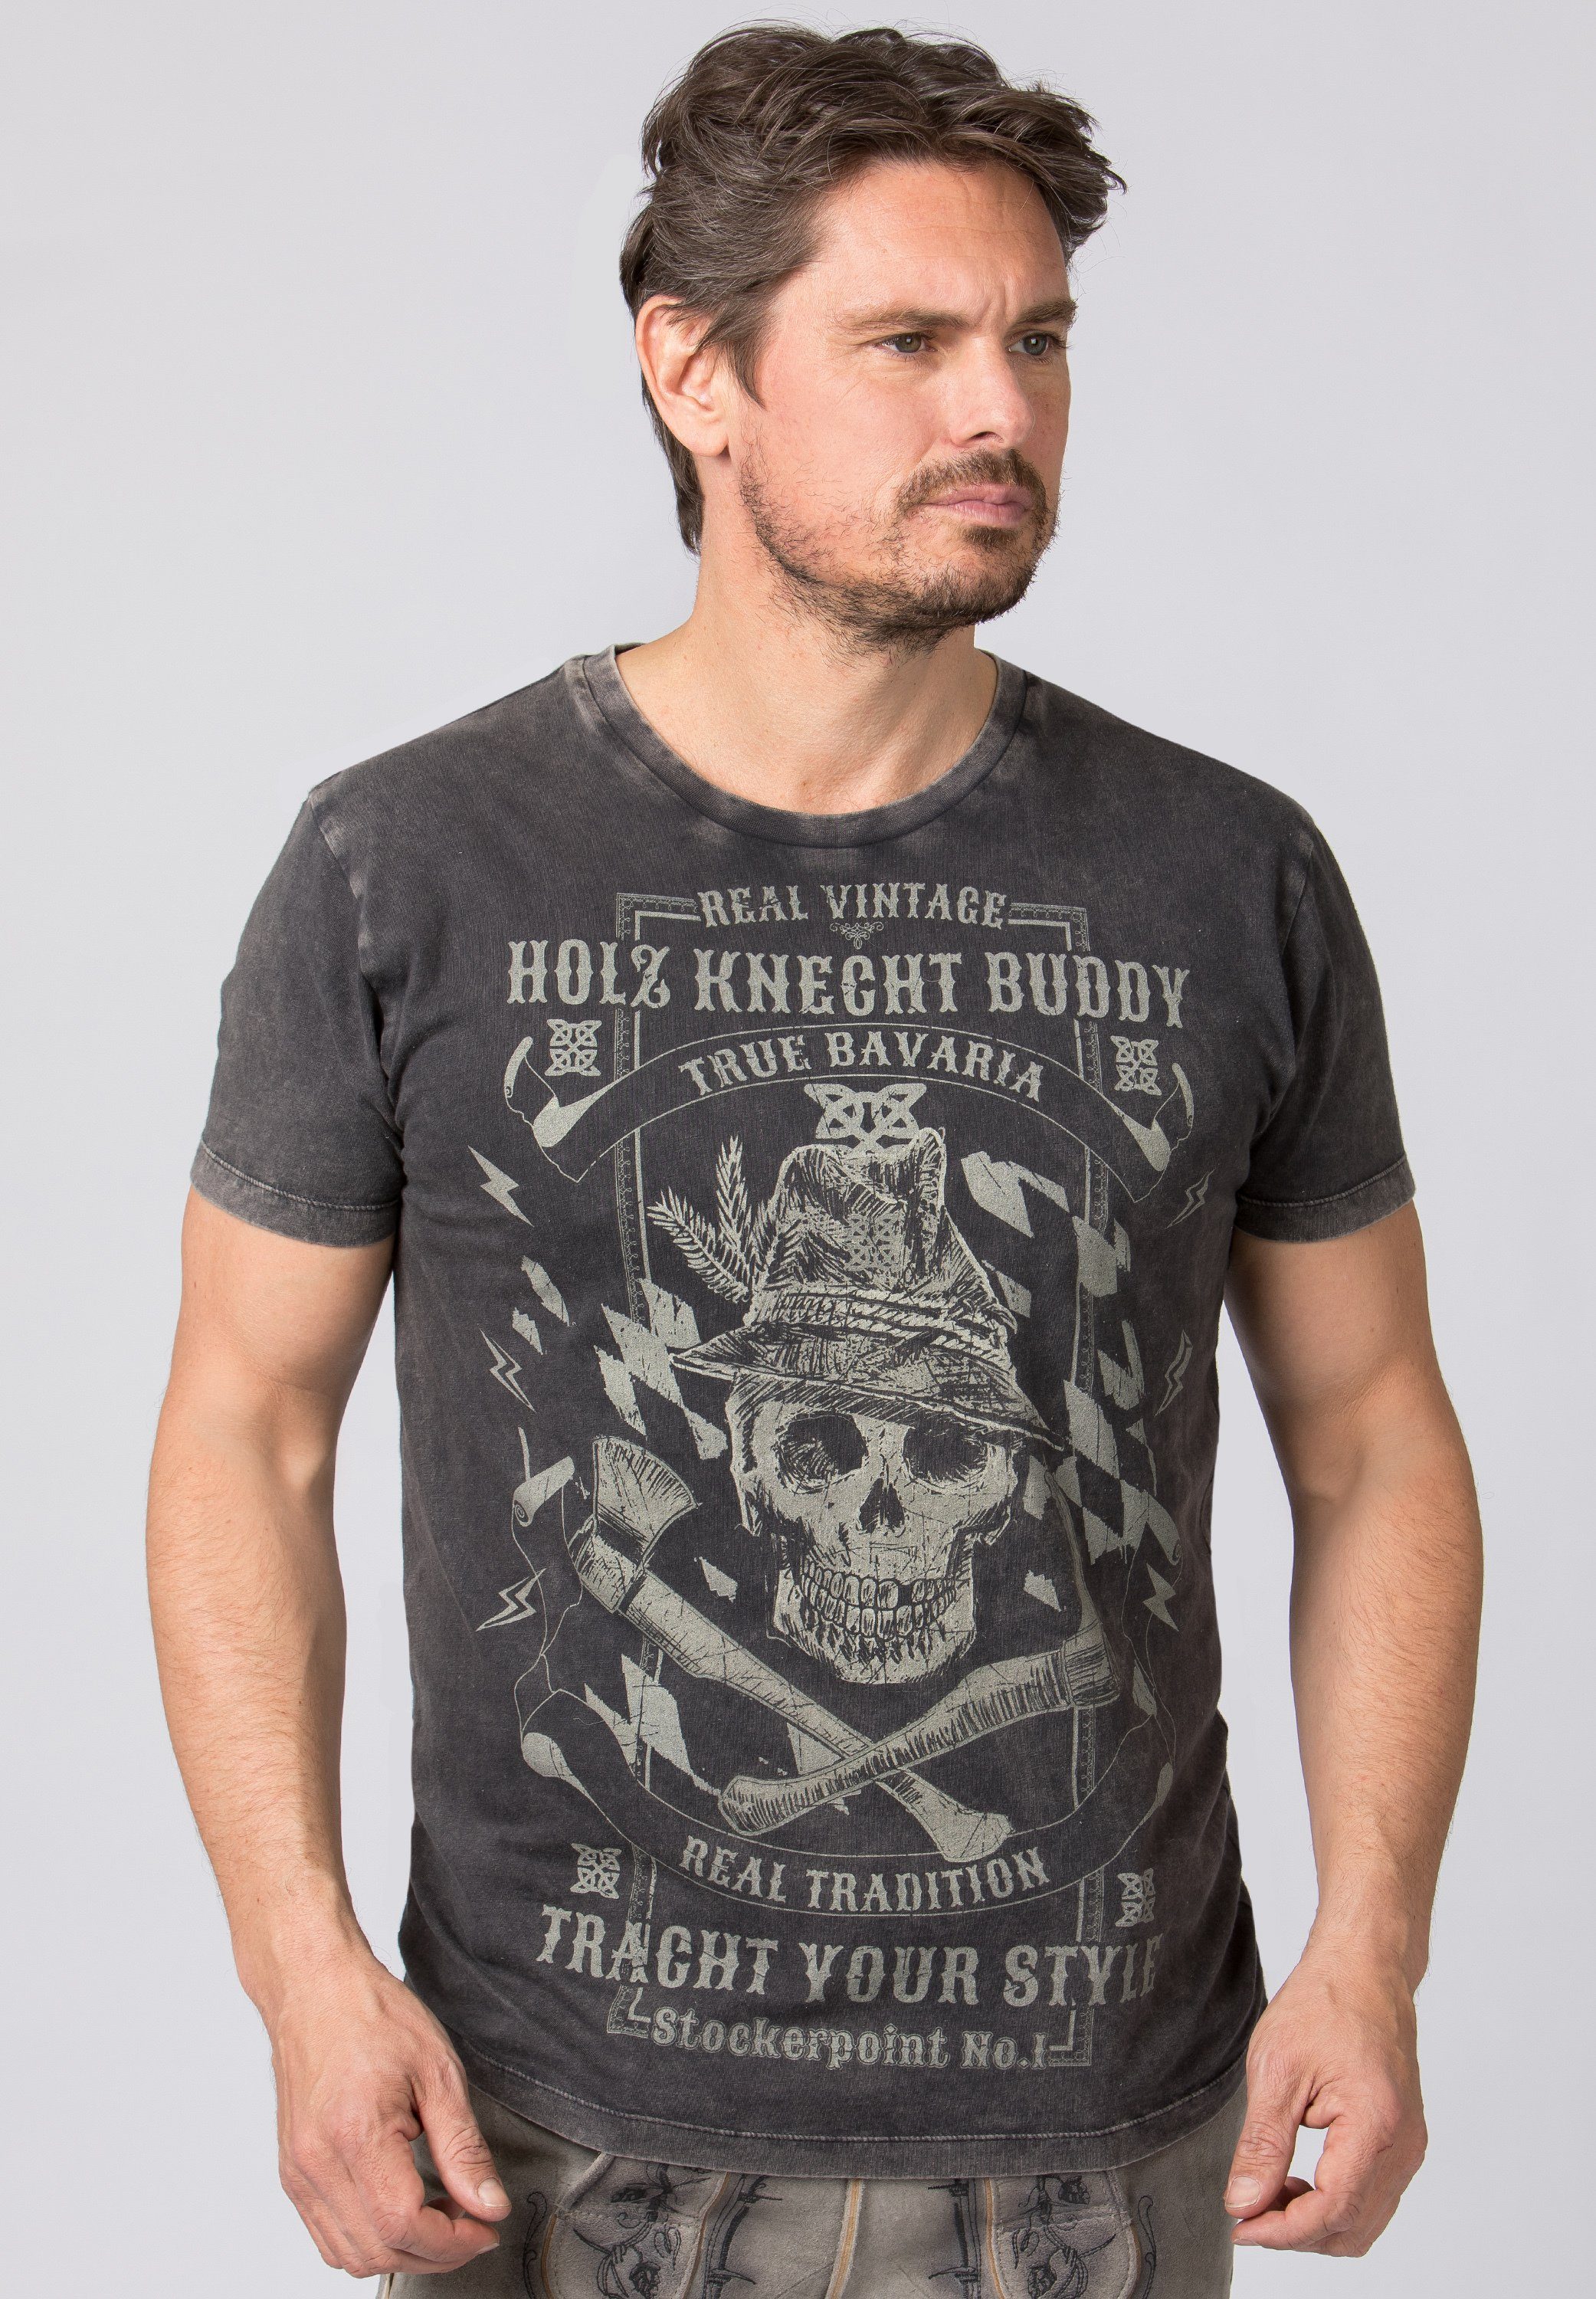 Stockerpoint Buddy T-Shirt